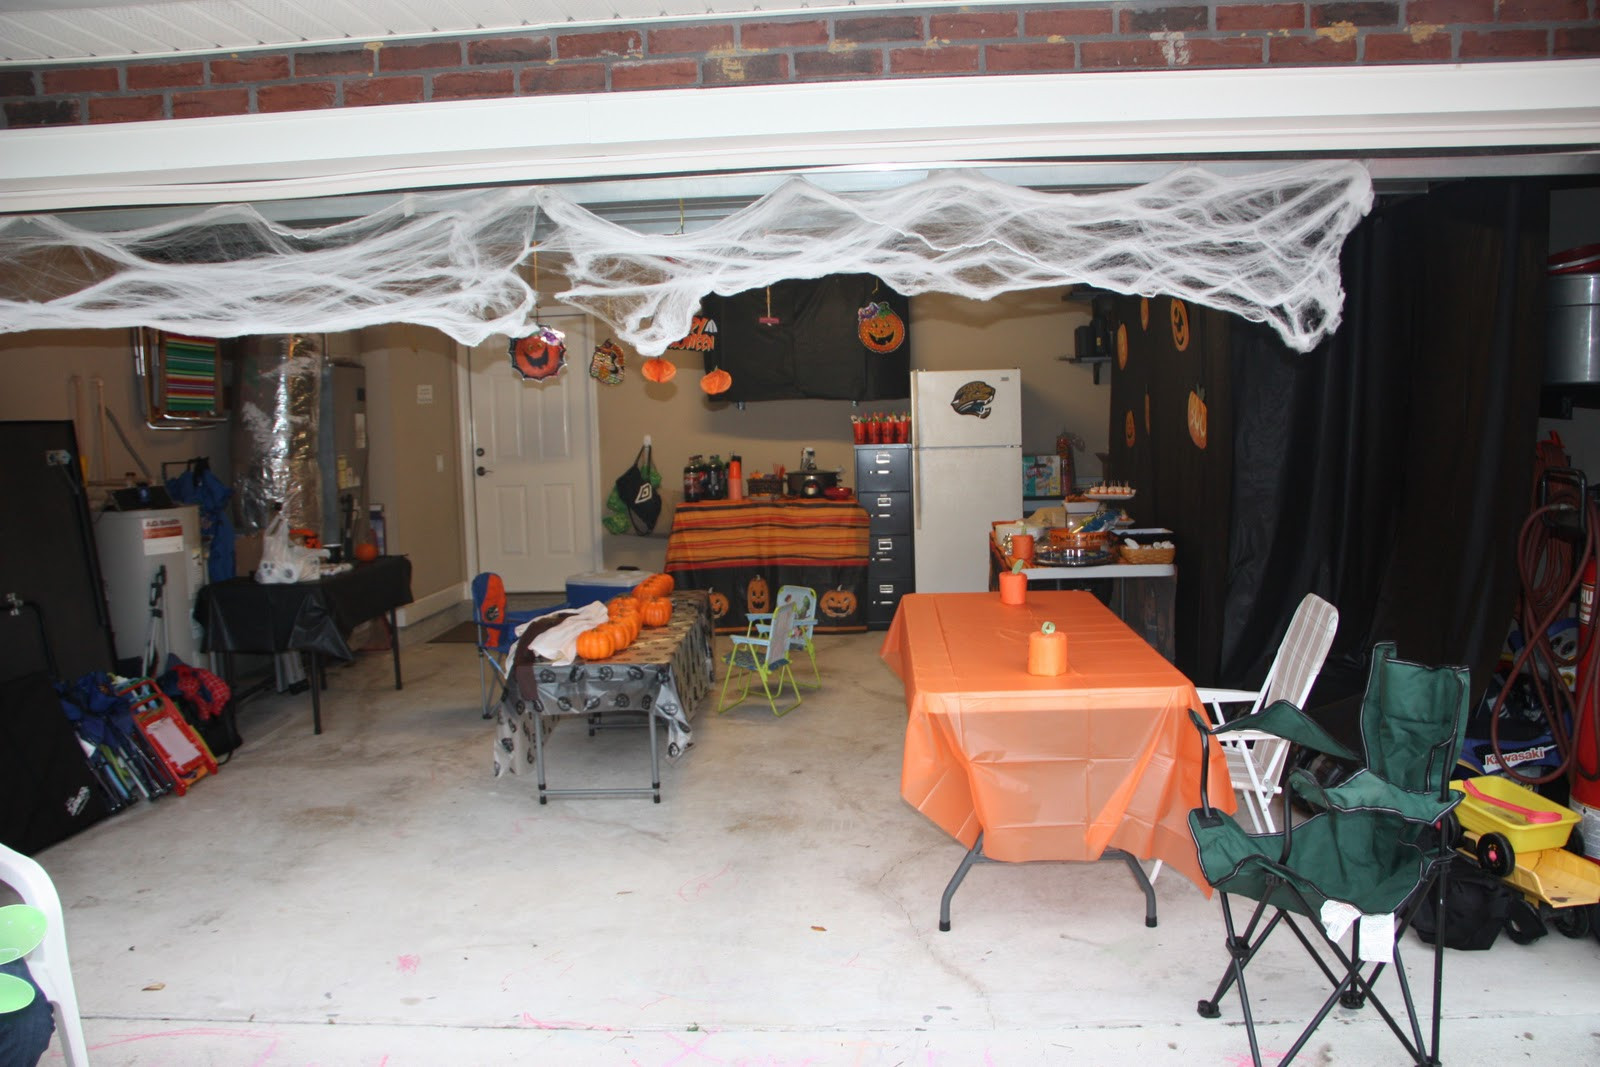 Halloween Garage Party Decorating Ideas
 Garage Party Ideas